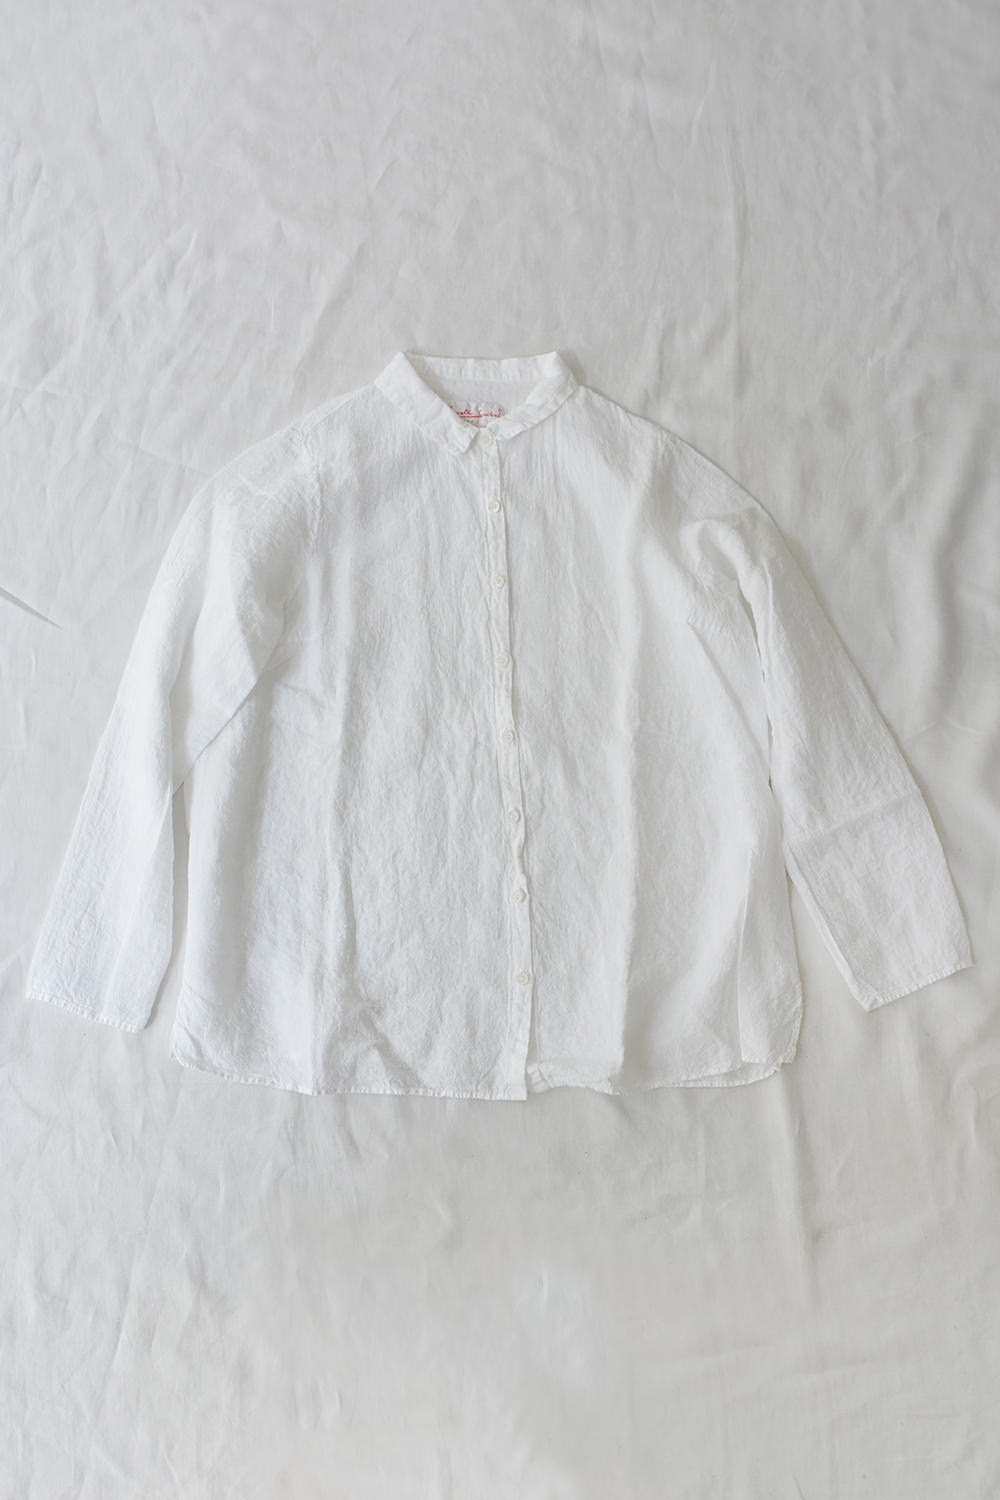 Manuelle Guibal linen shirt white top pictute